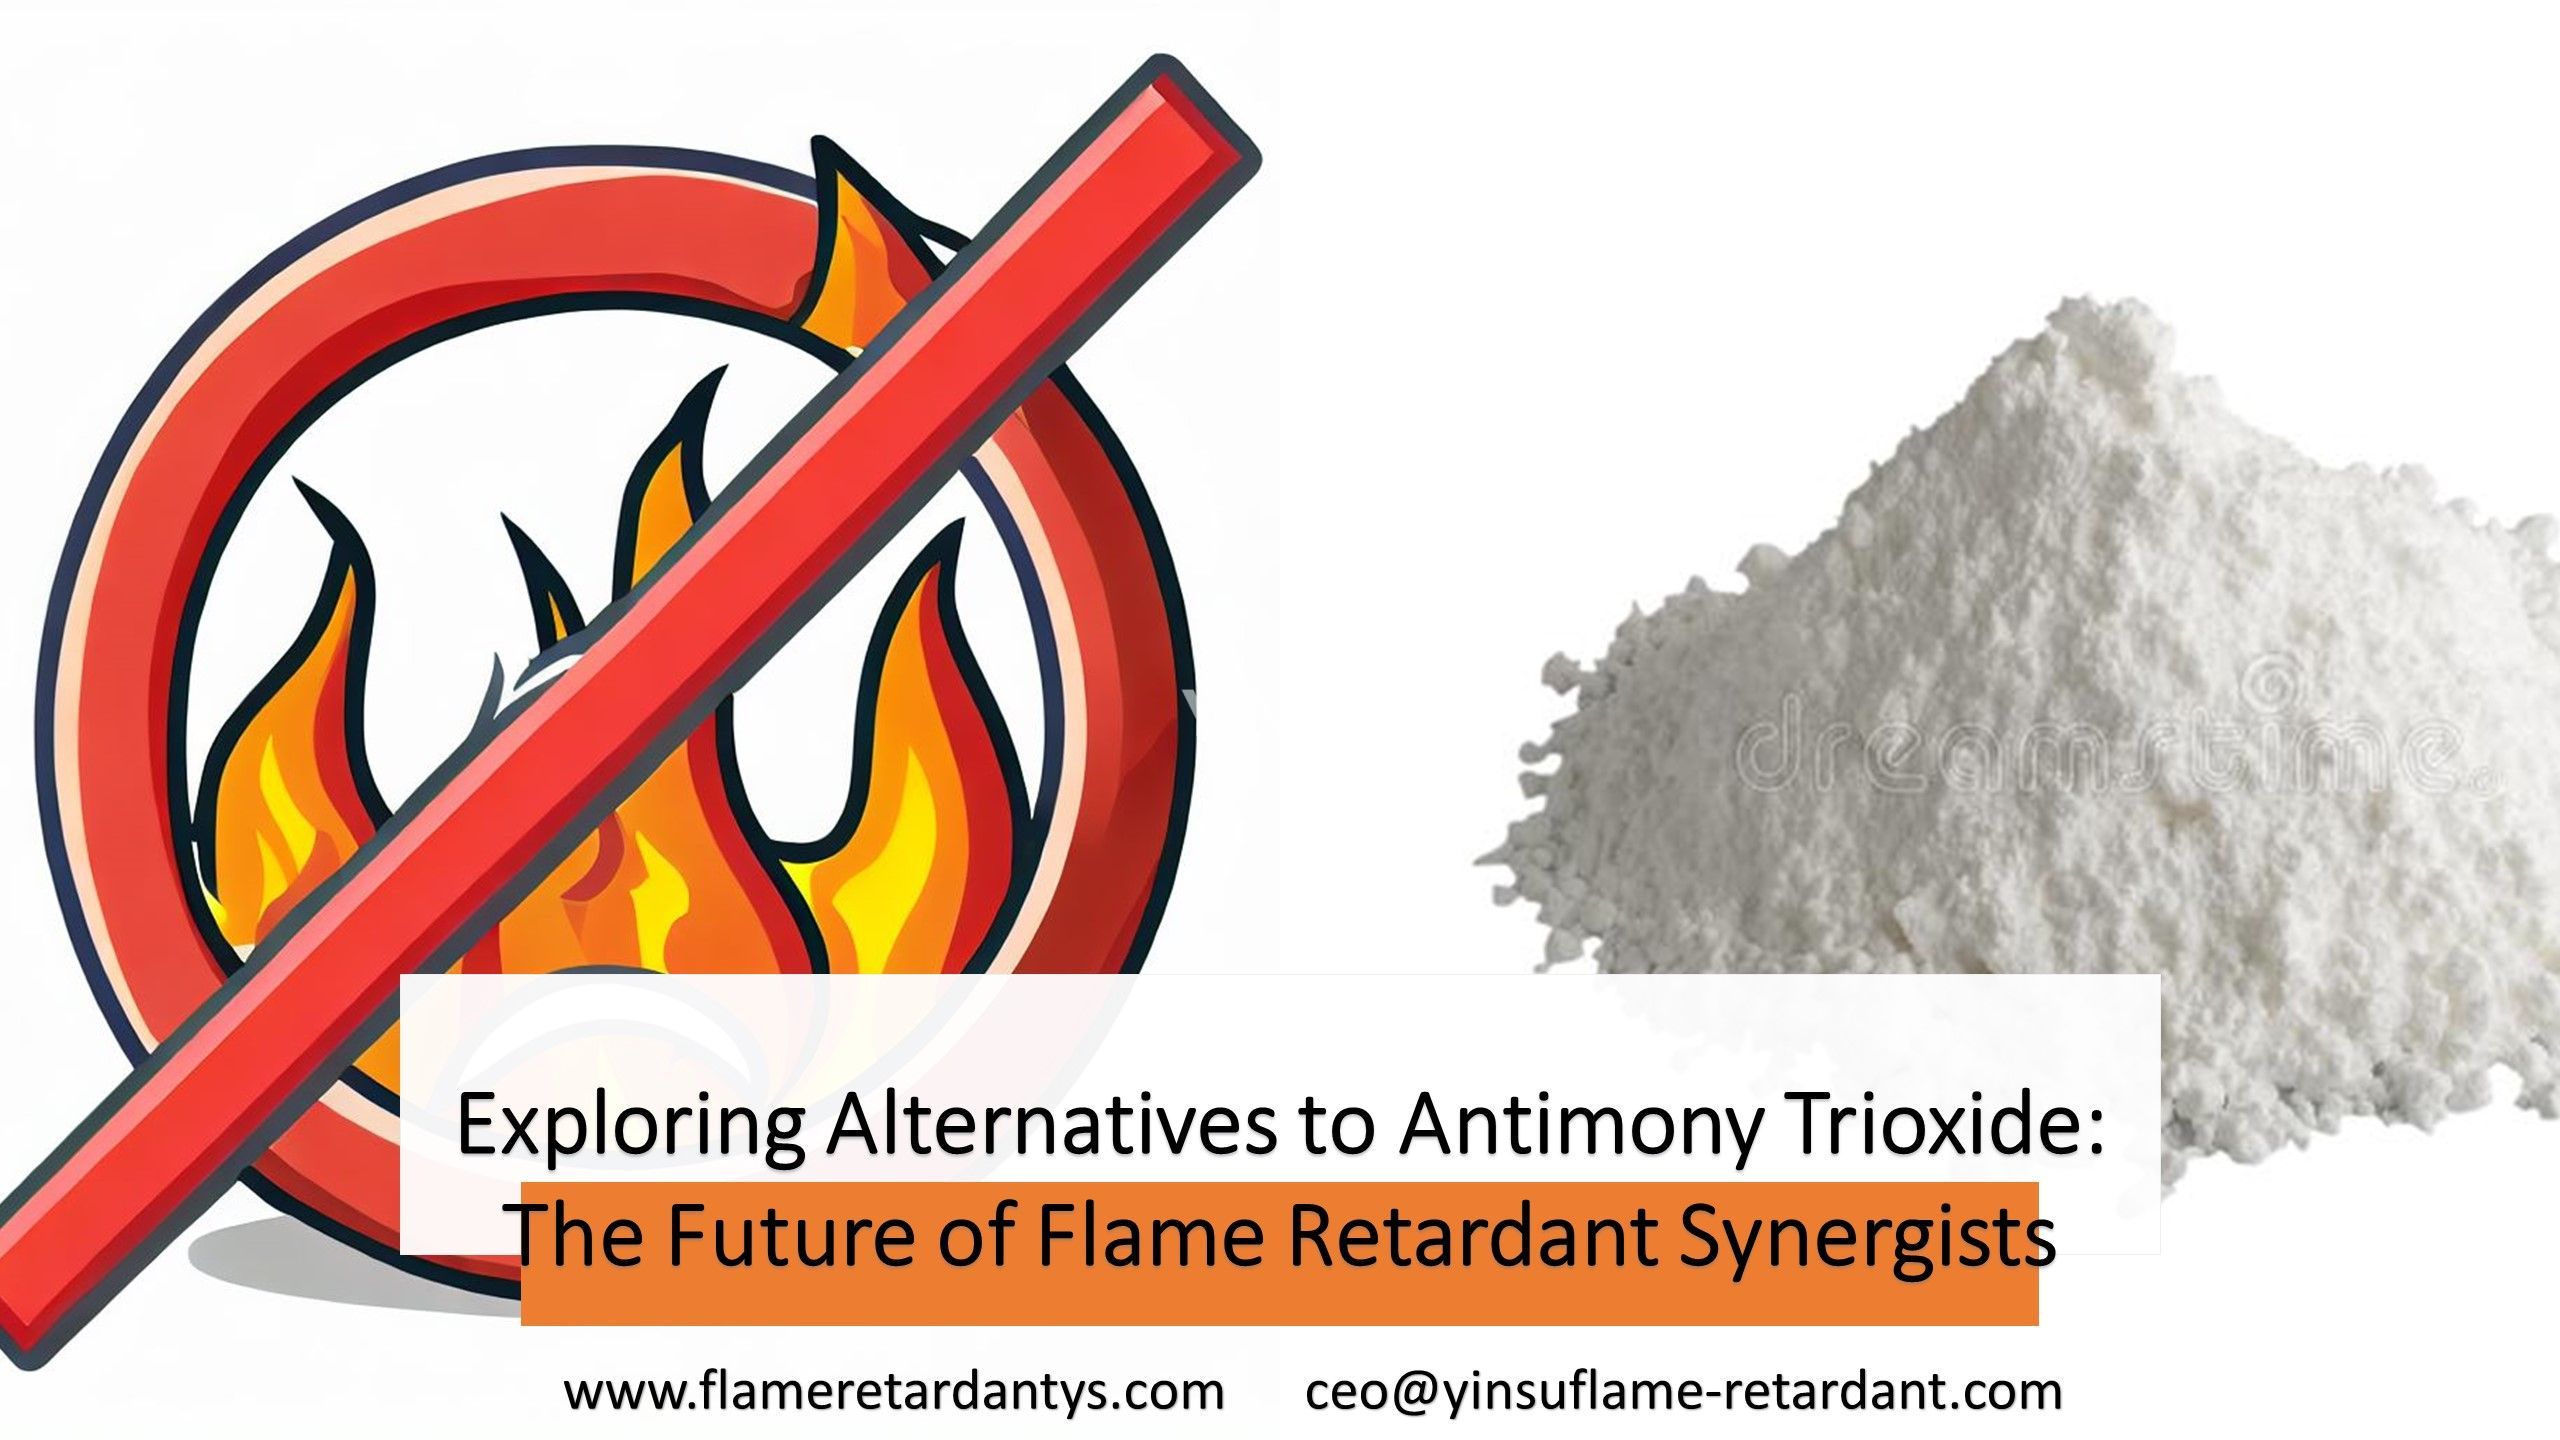 Explorando alternativas al trióxido de antimonio El futuro de los sinergistas retardantes de llama